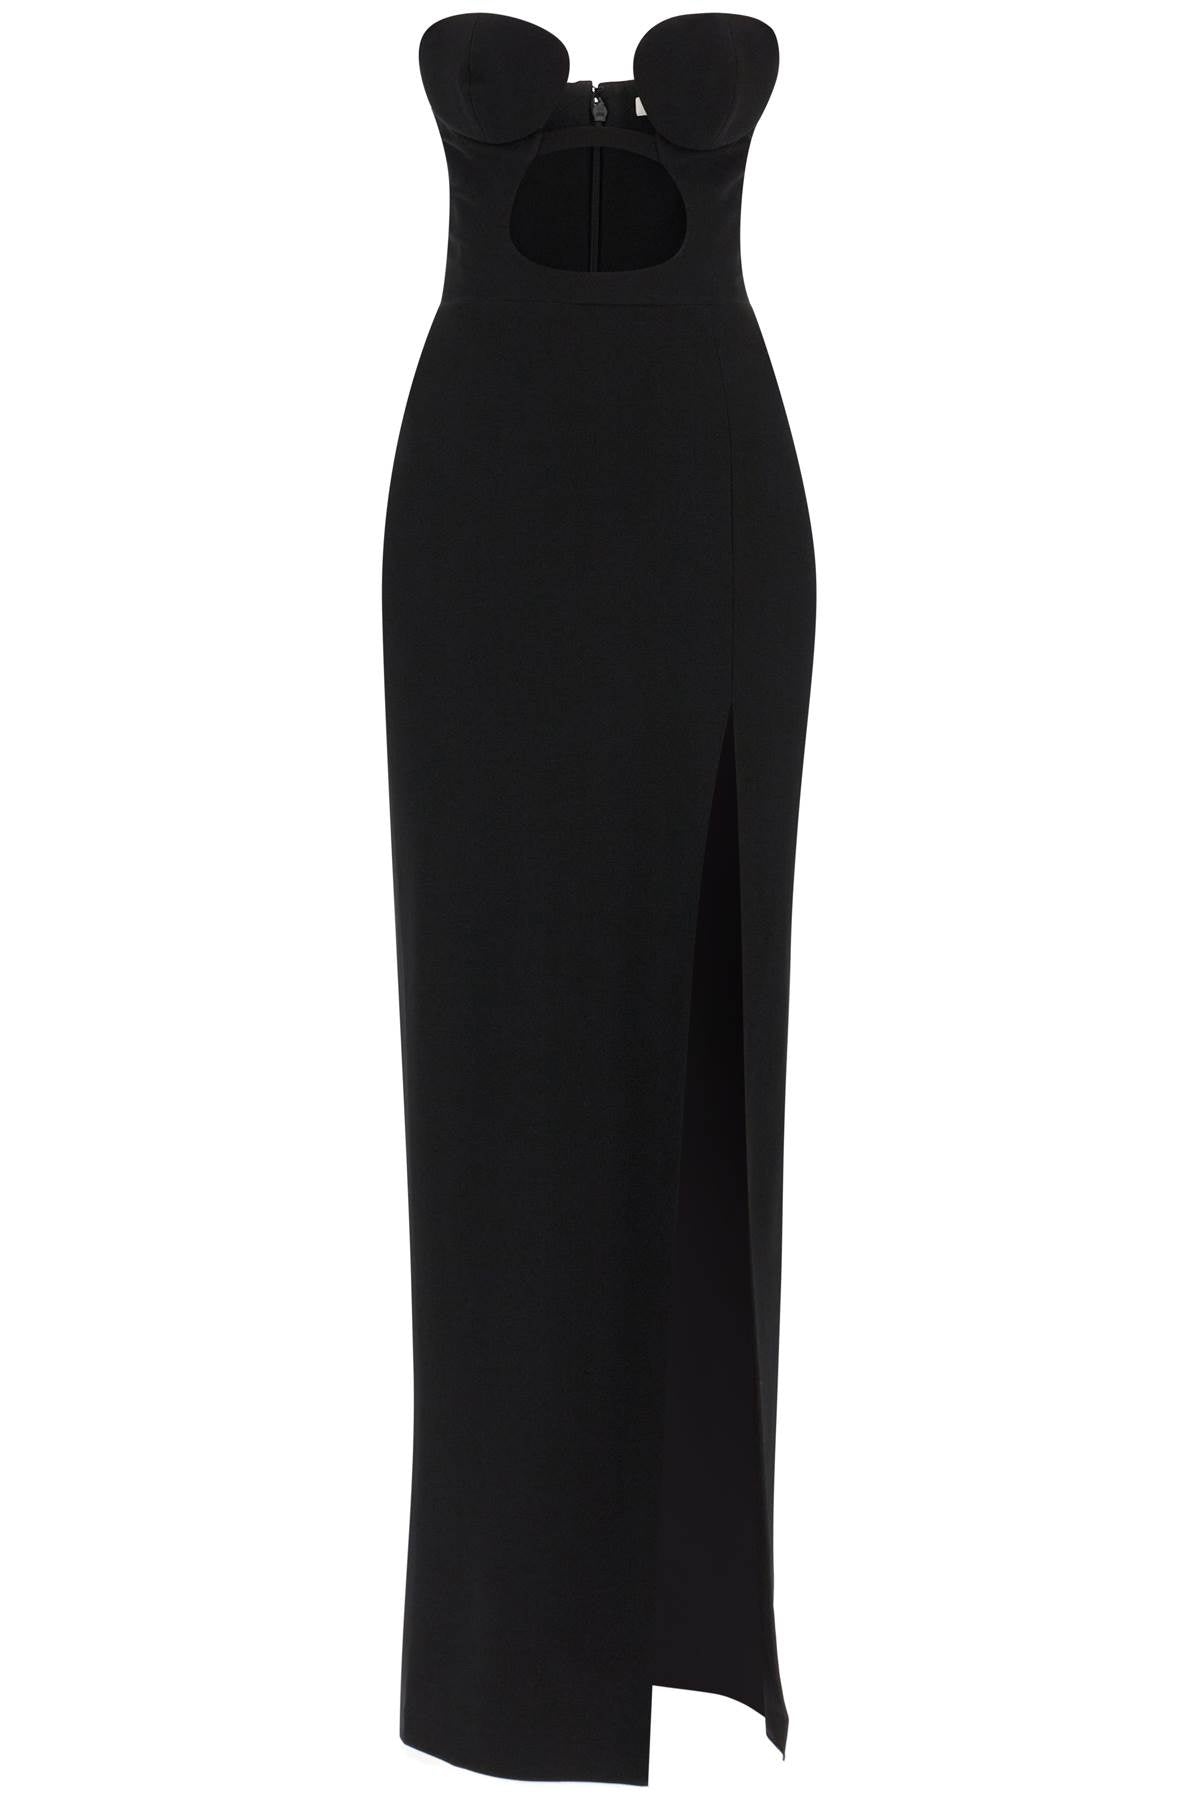 Nensi Dojaka Cut-Out Maxi Bustier Dress Black